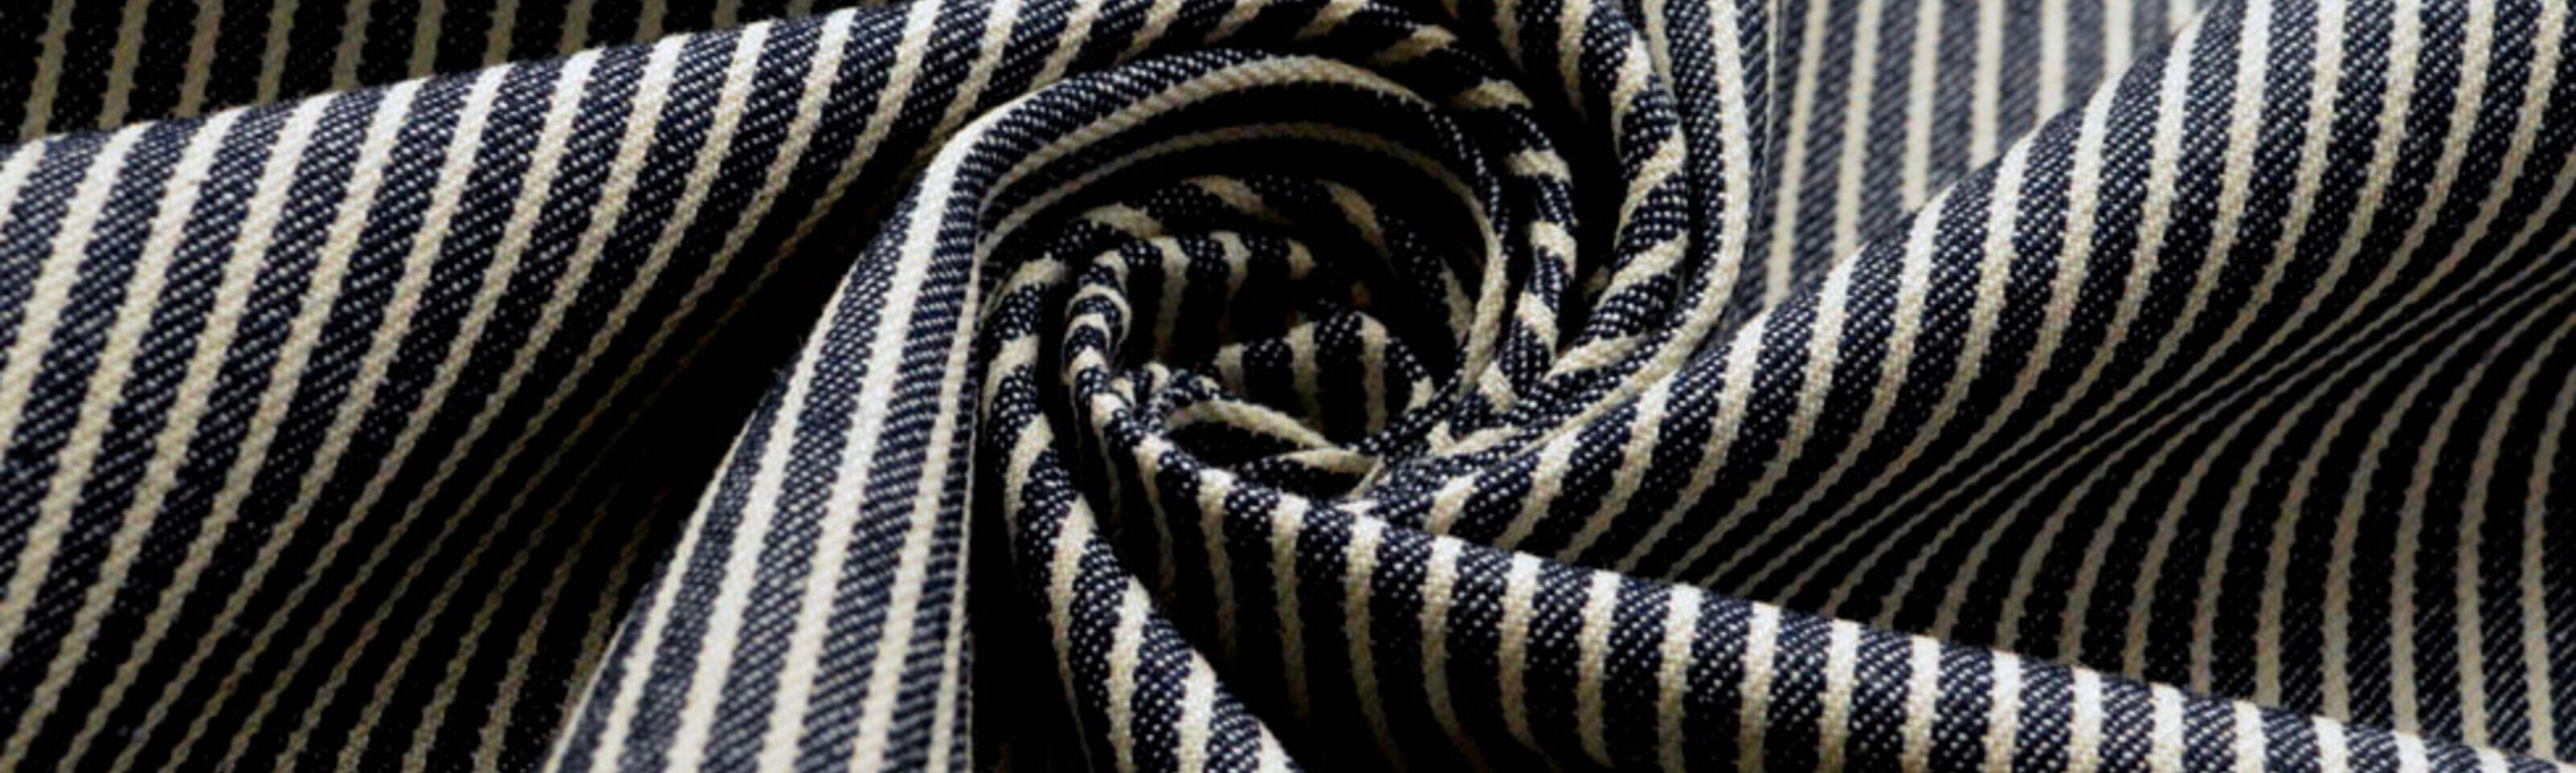 Denim - Henley Stripe - Blue Cream Striped Cotton Denim Trousering Fabric d